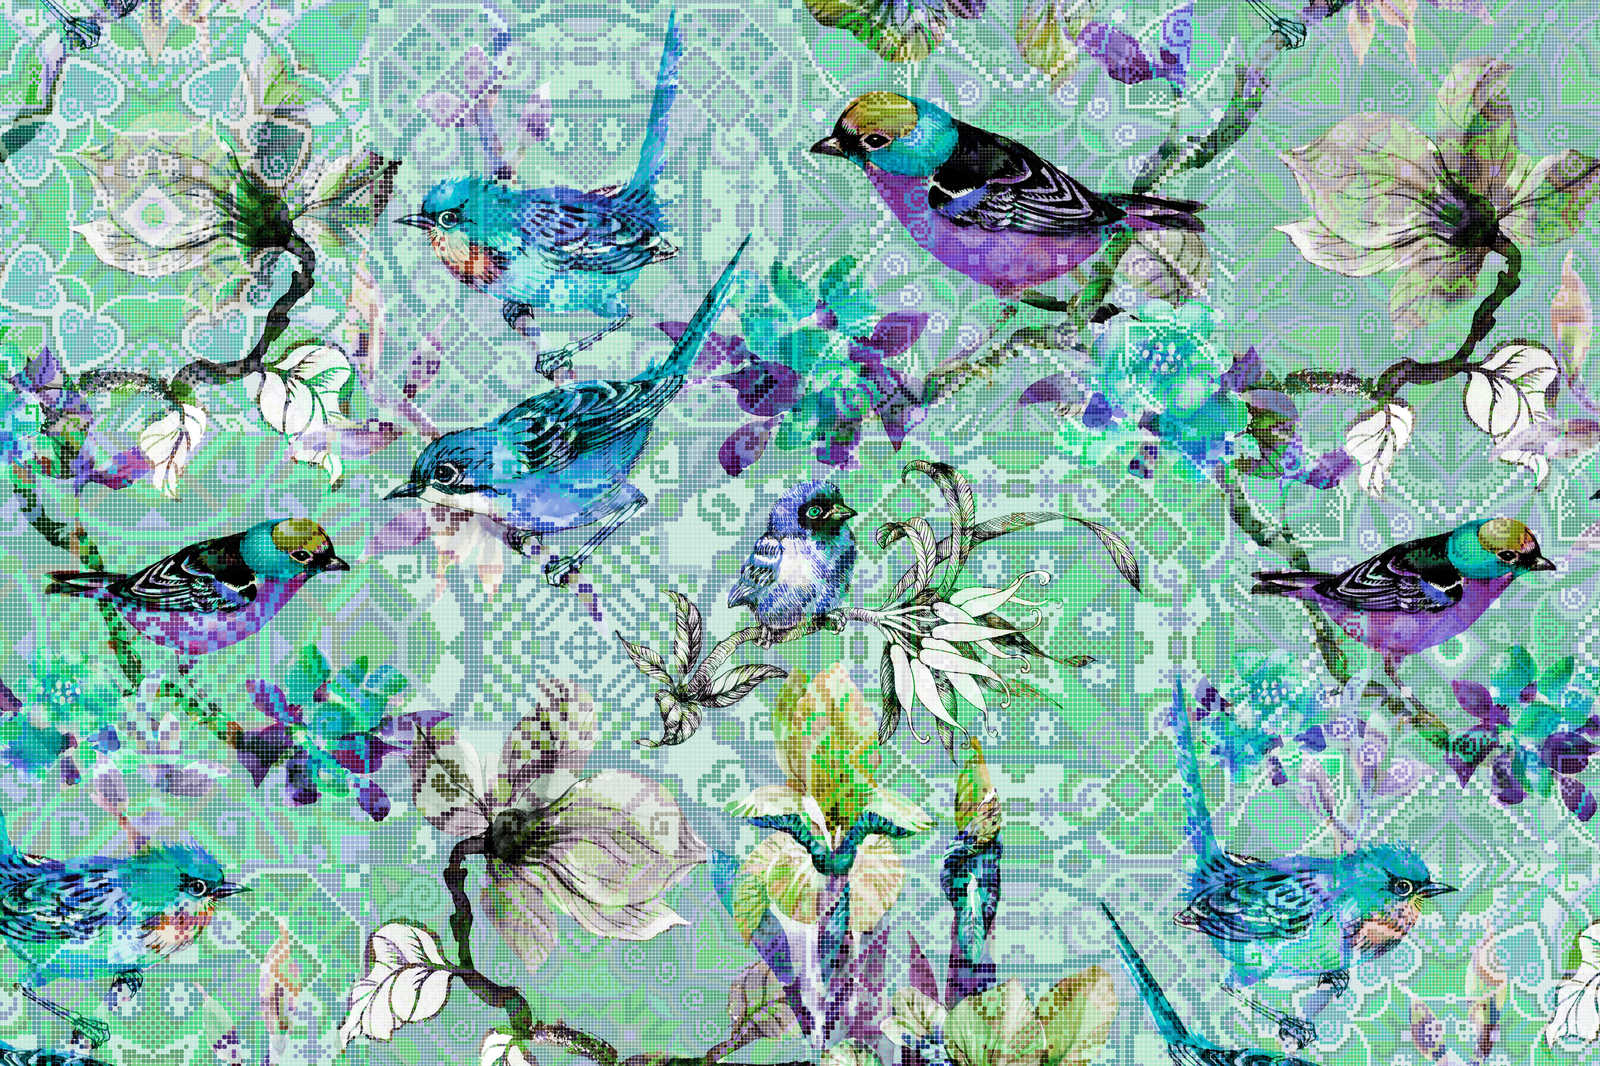             Bird canvas picture with mosaic pattern | mosaic birds 3 - 0,90 m x 0,60 m
        